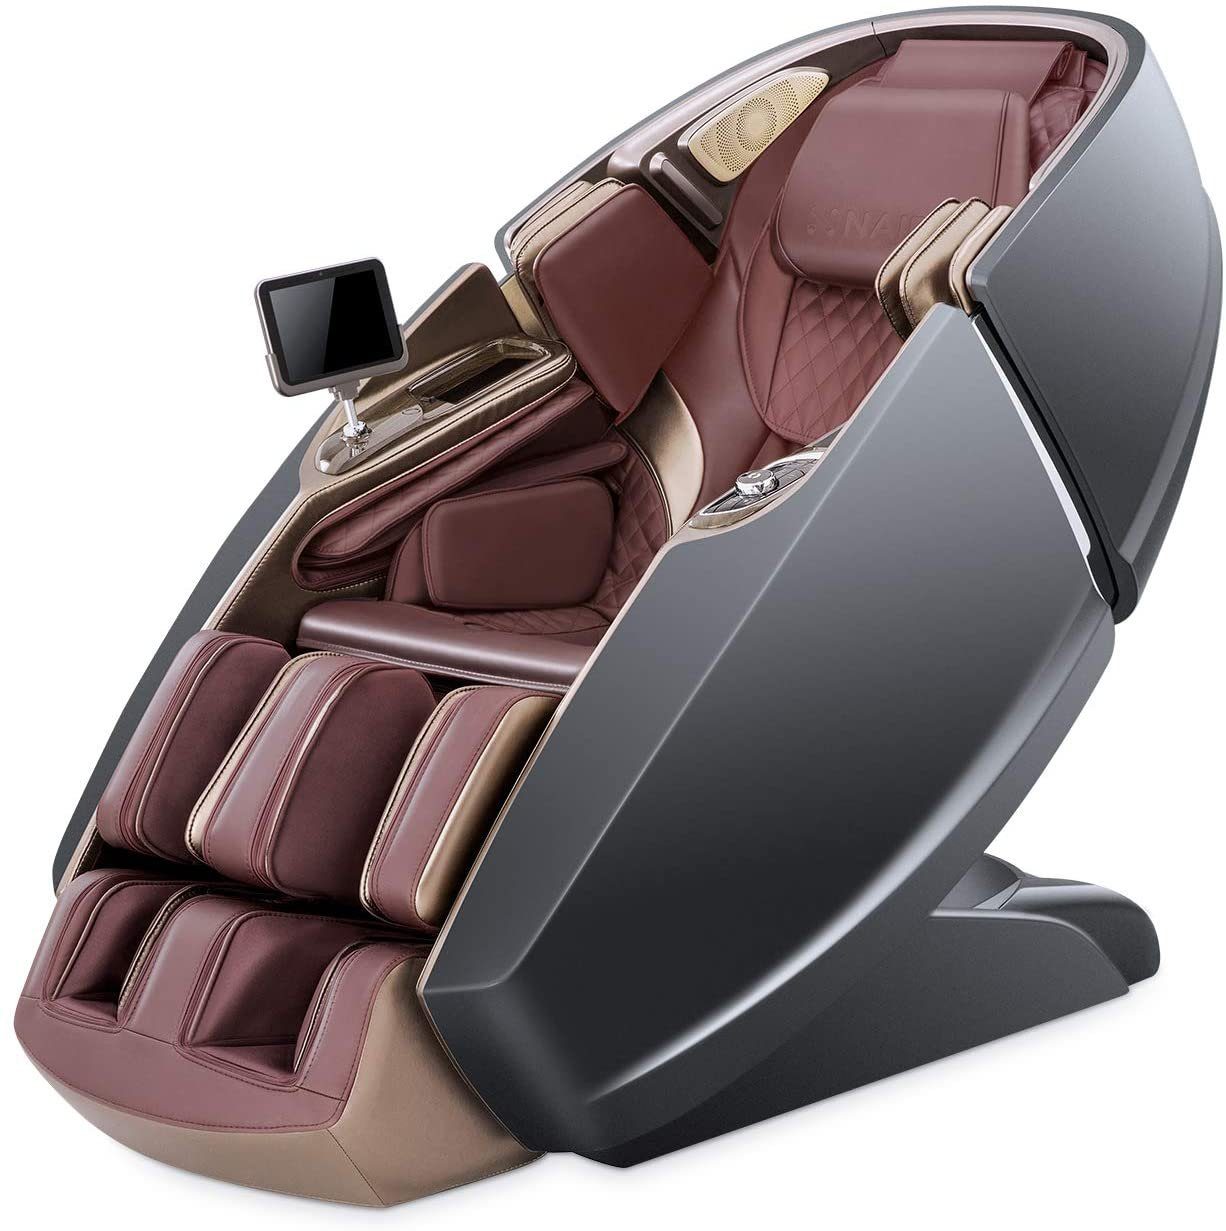 NAIPO Massagesessel, 3D High-End Massagestuhl mit Tablet, Raumkapsel-Design GRAU-ROT